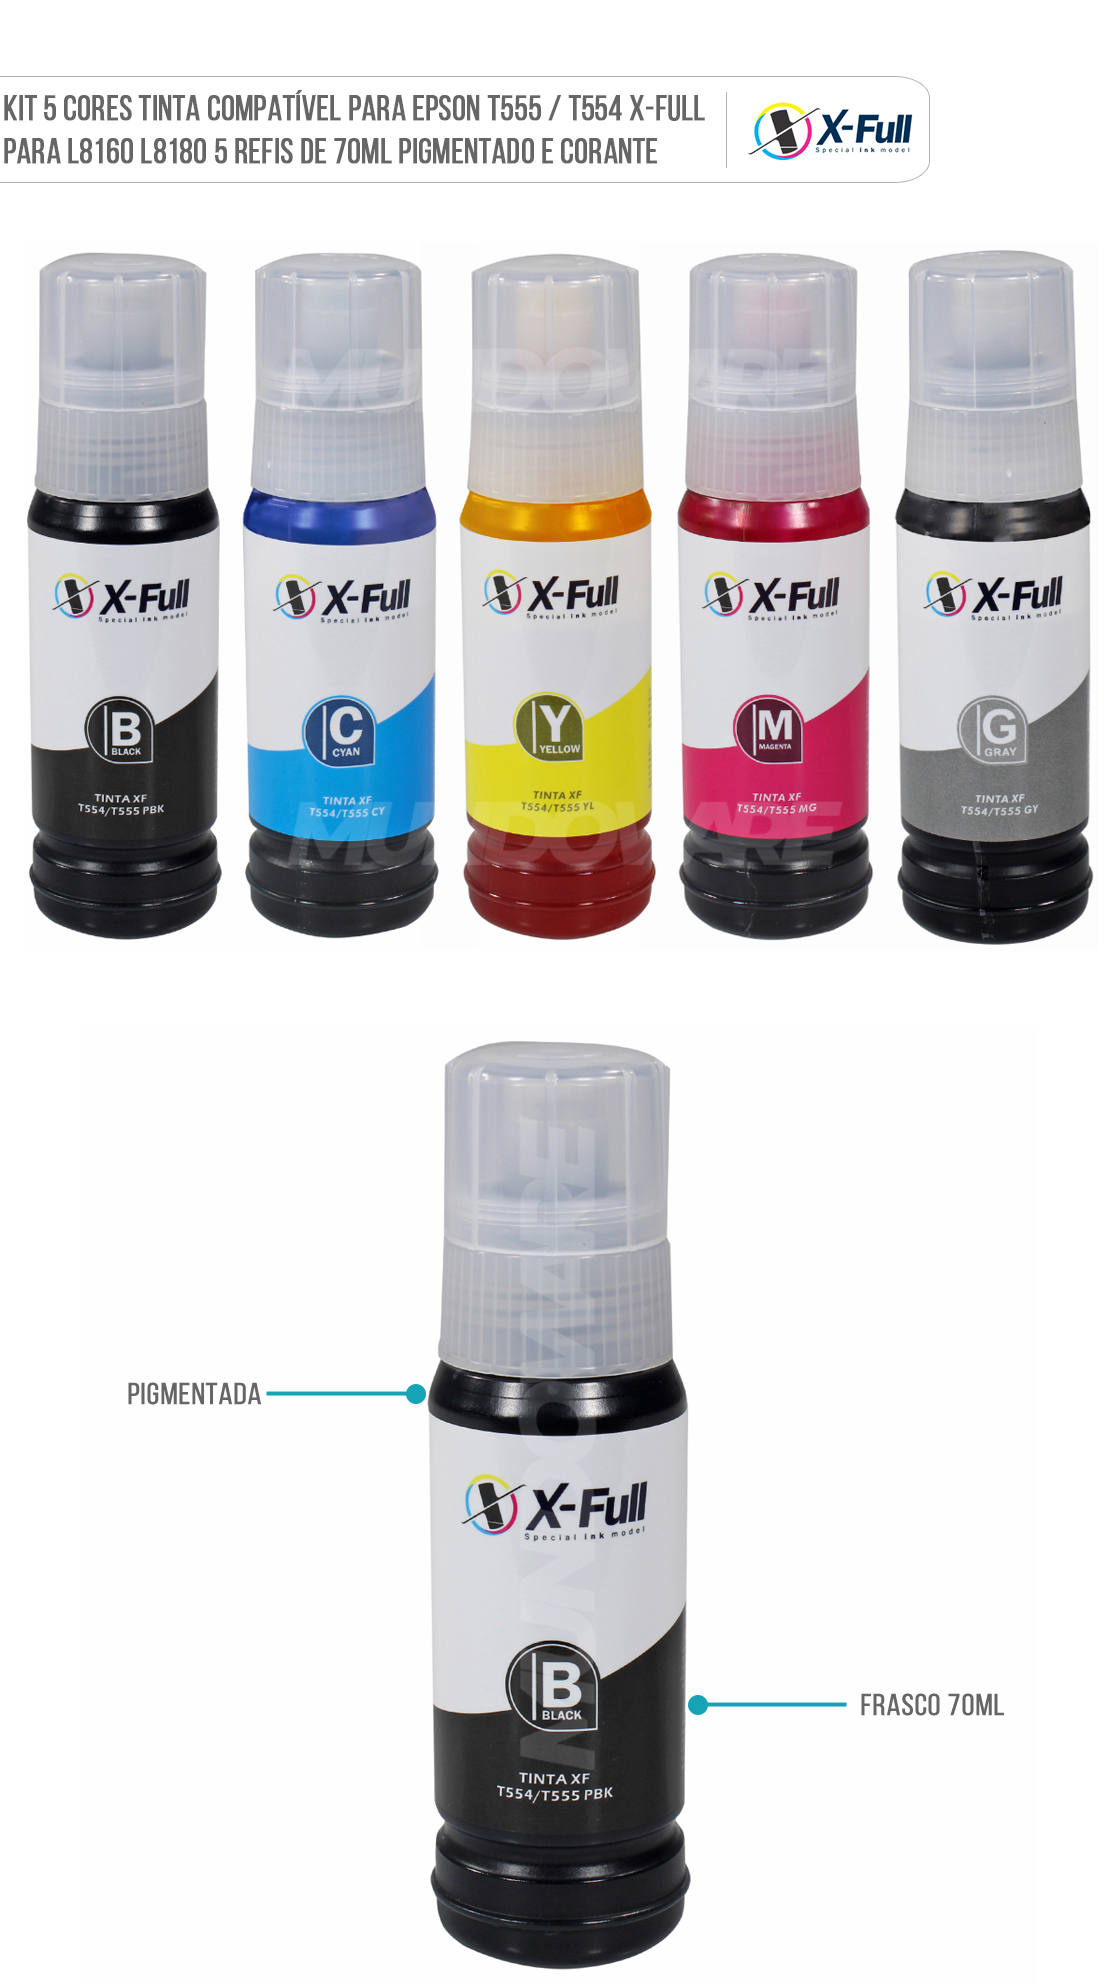 Kit 5 Cores Tinta Compatível para Epson 555 / 554 X-Full para L8160 L8180 5x70ml Preto Pigmentado e Coloridas Corante